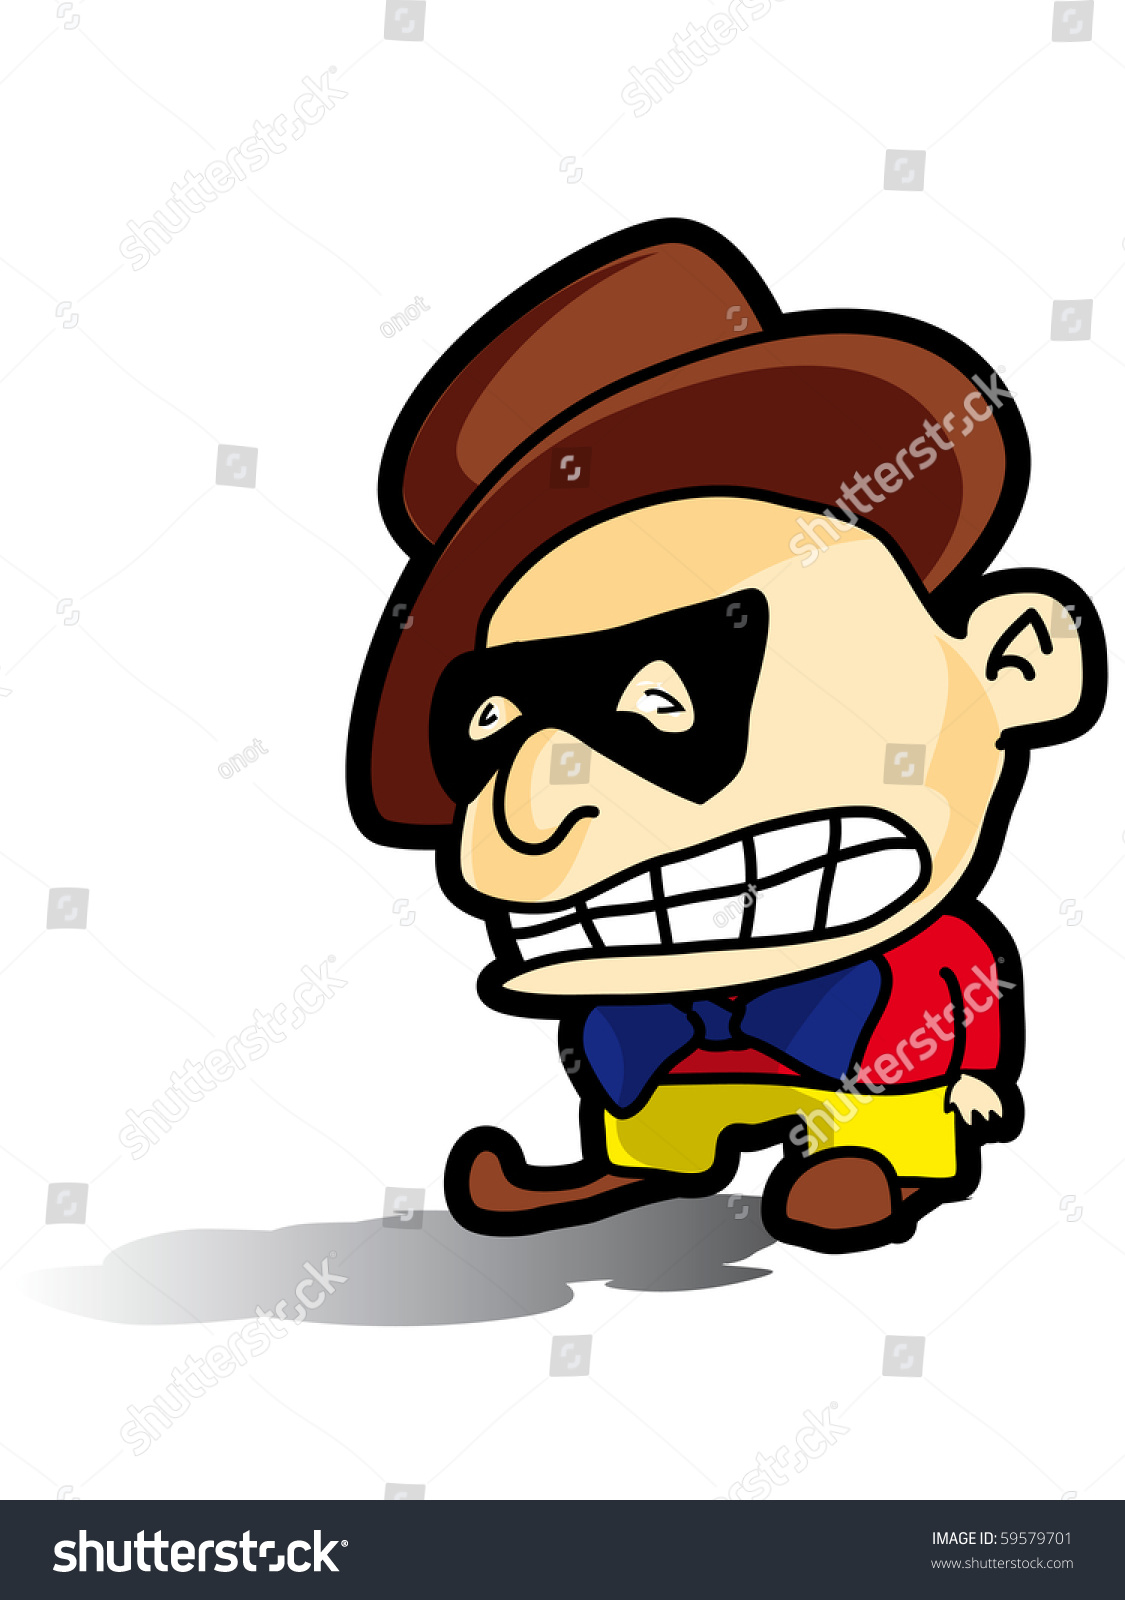 Cartoon Character Gangster - Vector Illustration - 59579701 : Shutterstock